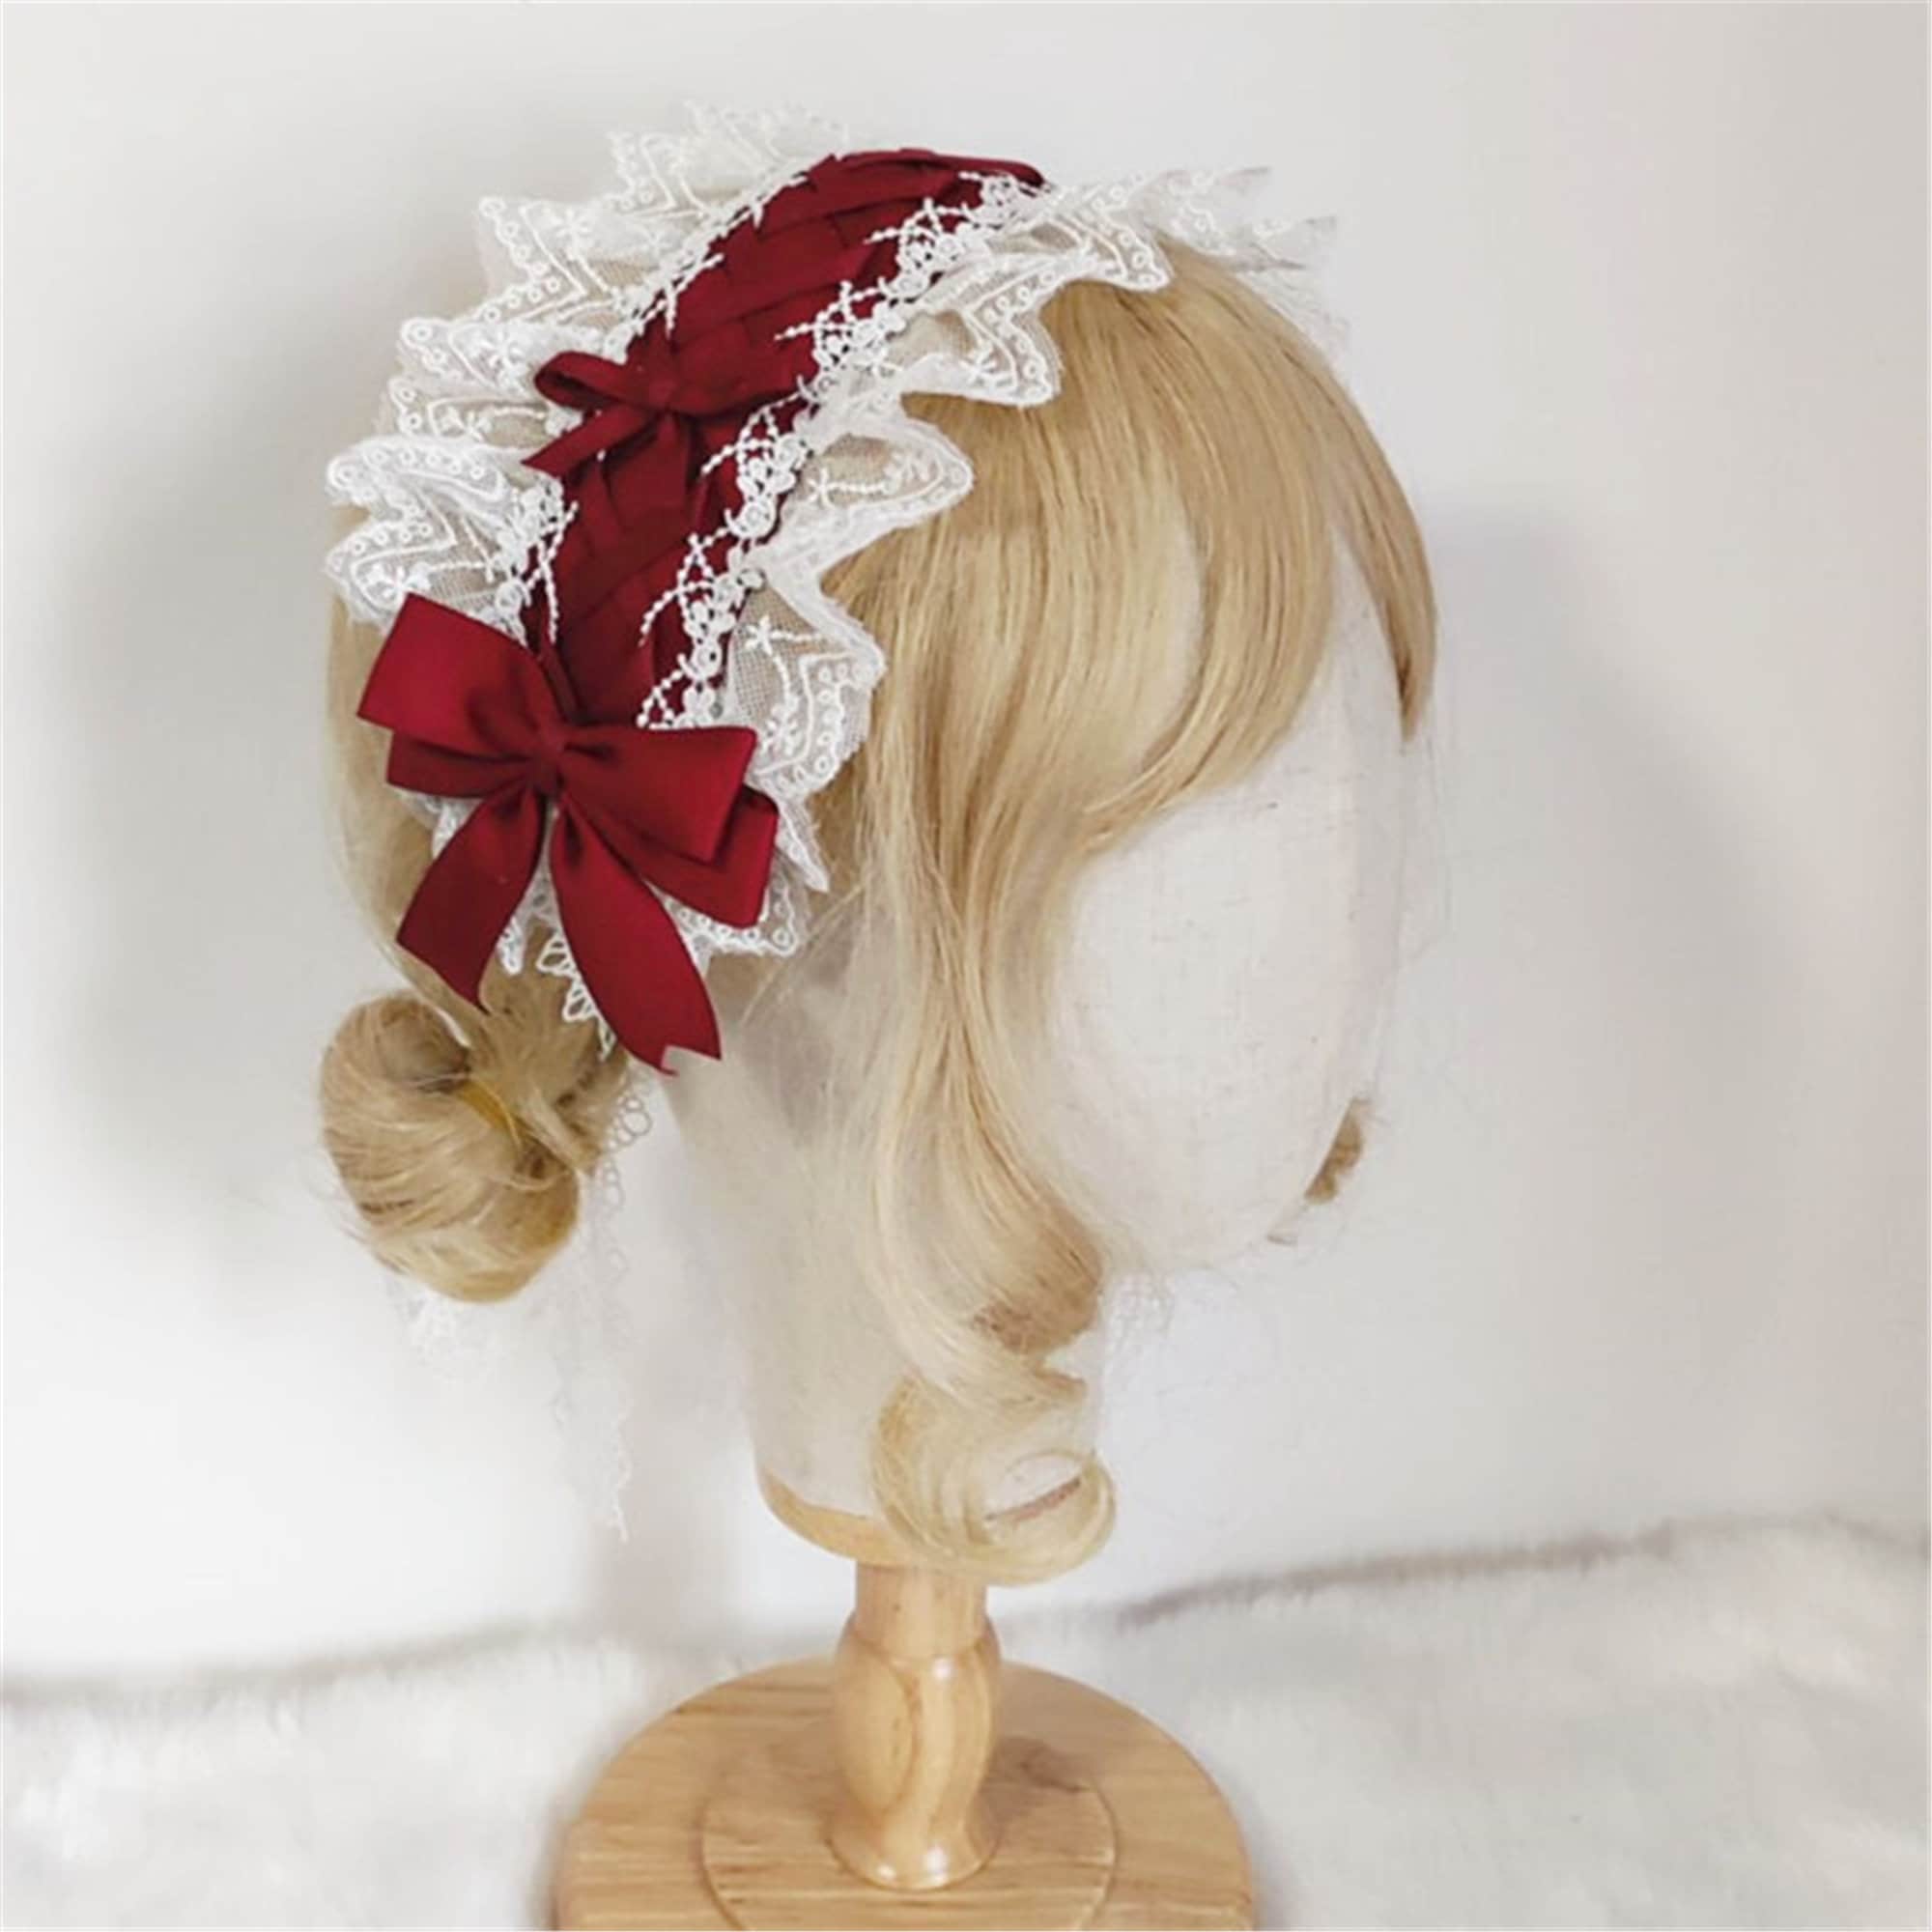 Lolita Fashion Accessories Japanese Girls Lace Headpiece | Etsy